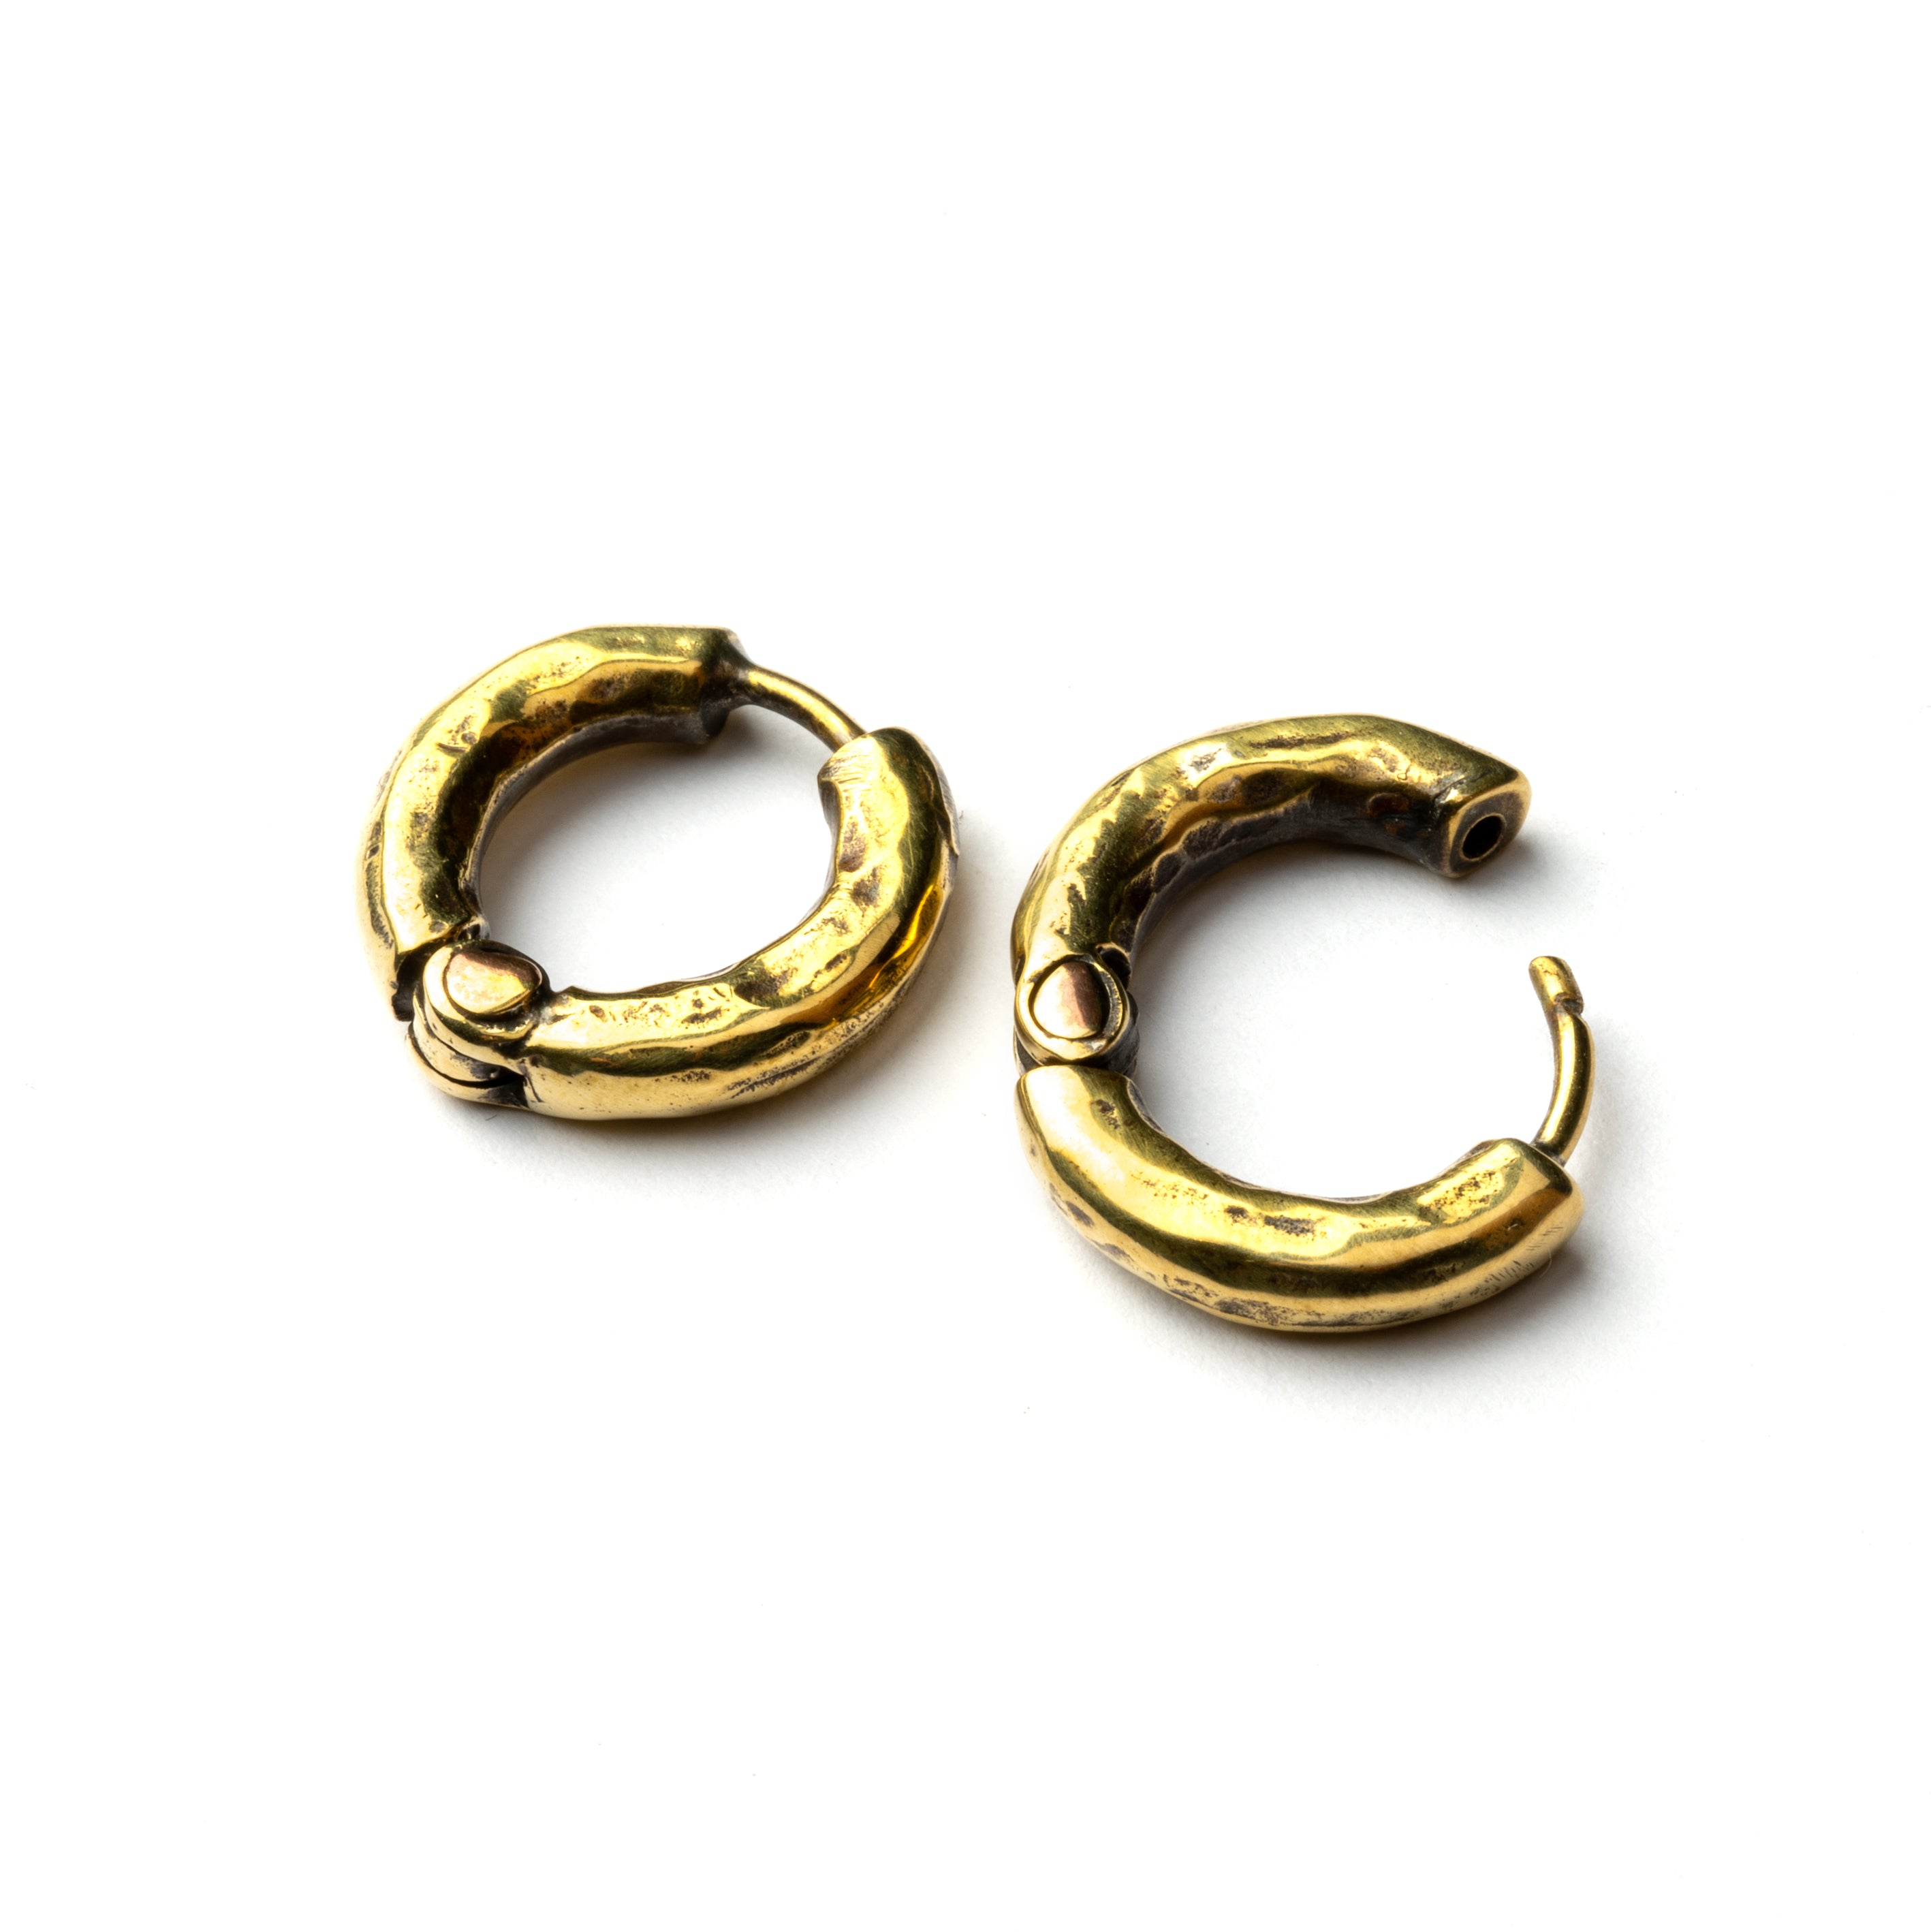 Hammered brass Clicker hoop Earrings open clasp view